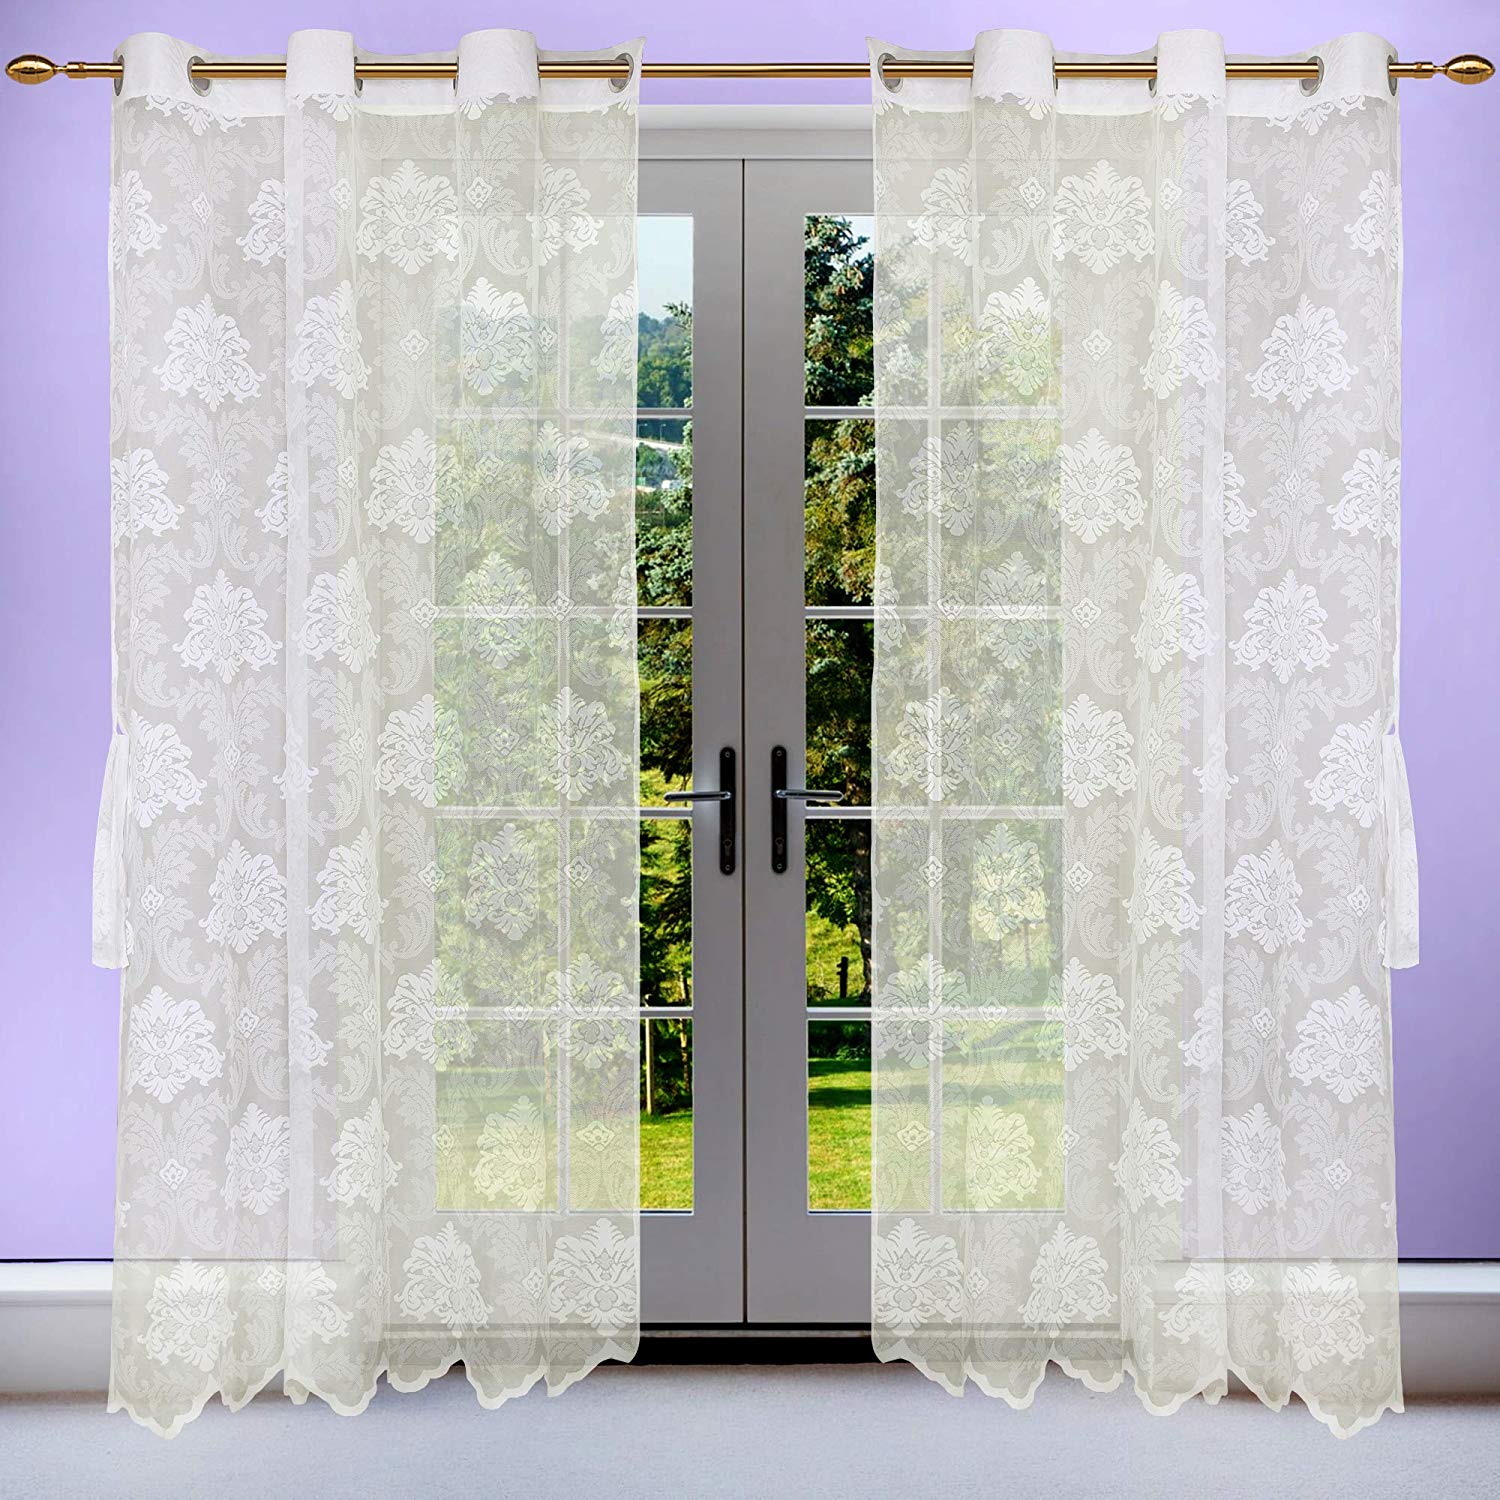 Linenwalas Elegant Damask Design Sheer Curtains With Eyelet Rings For Living Room Bedroom Balcony Set Of 2 Panels